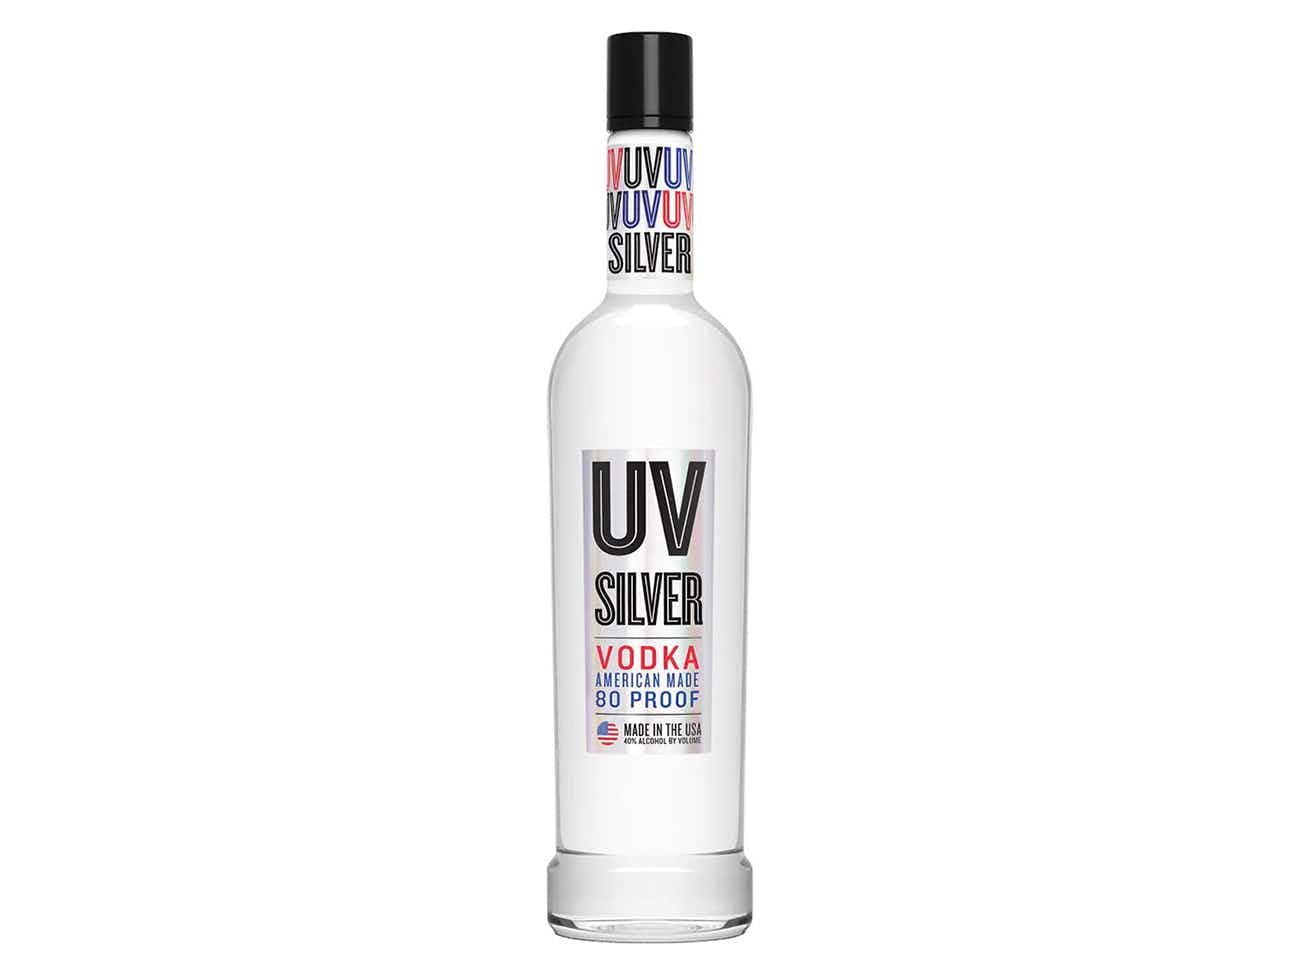 best cheap vodkas - uv silver vodka 80 proof bottle